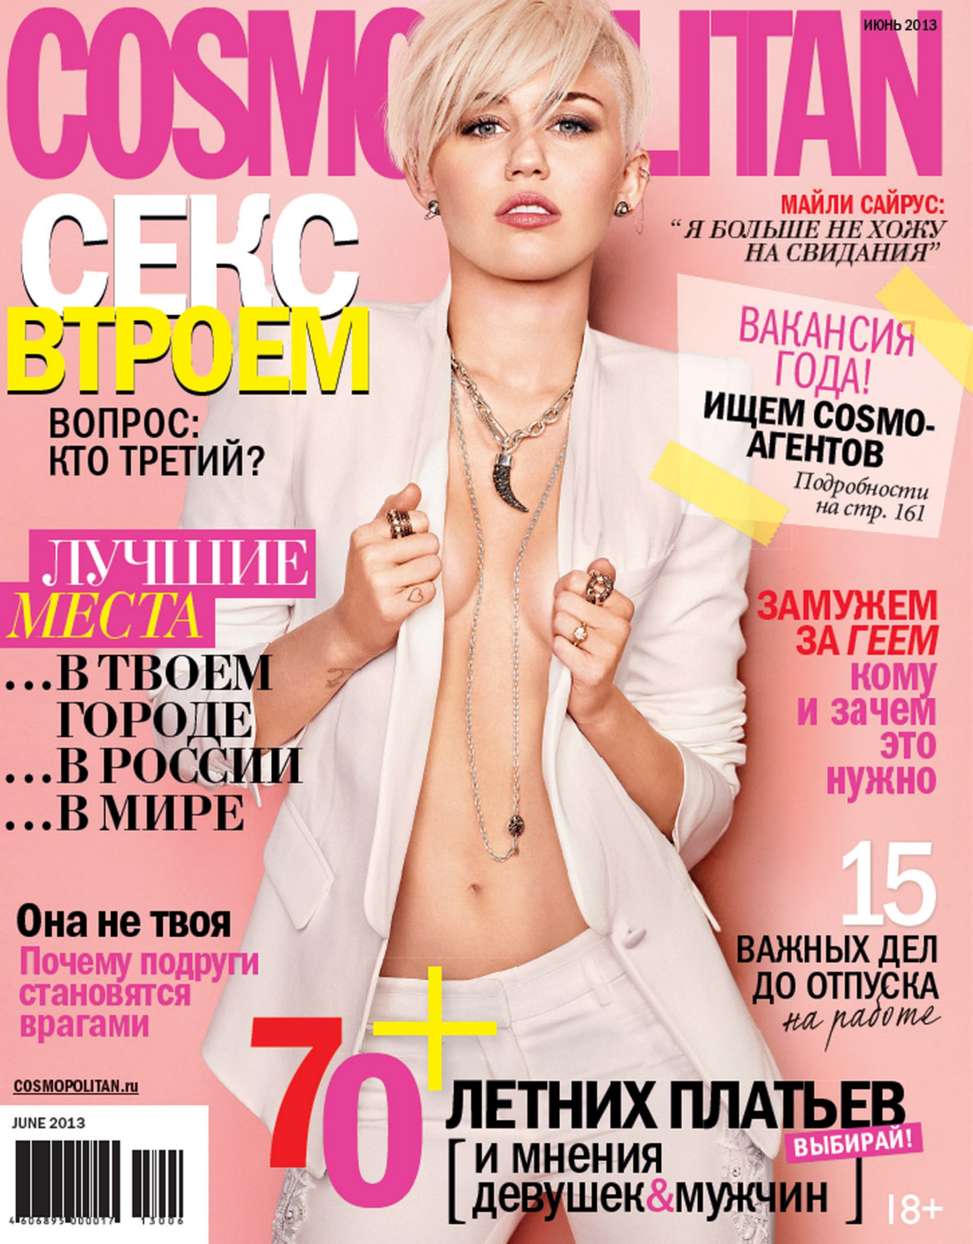 Cosmopolitan 06-2013